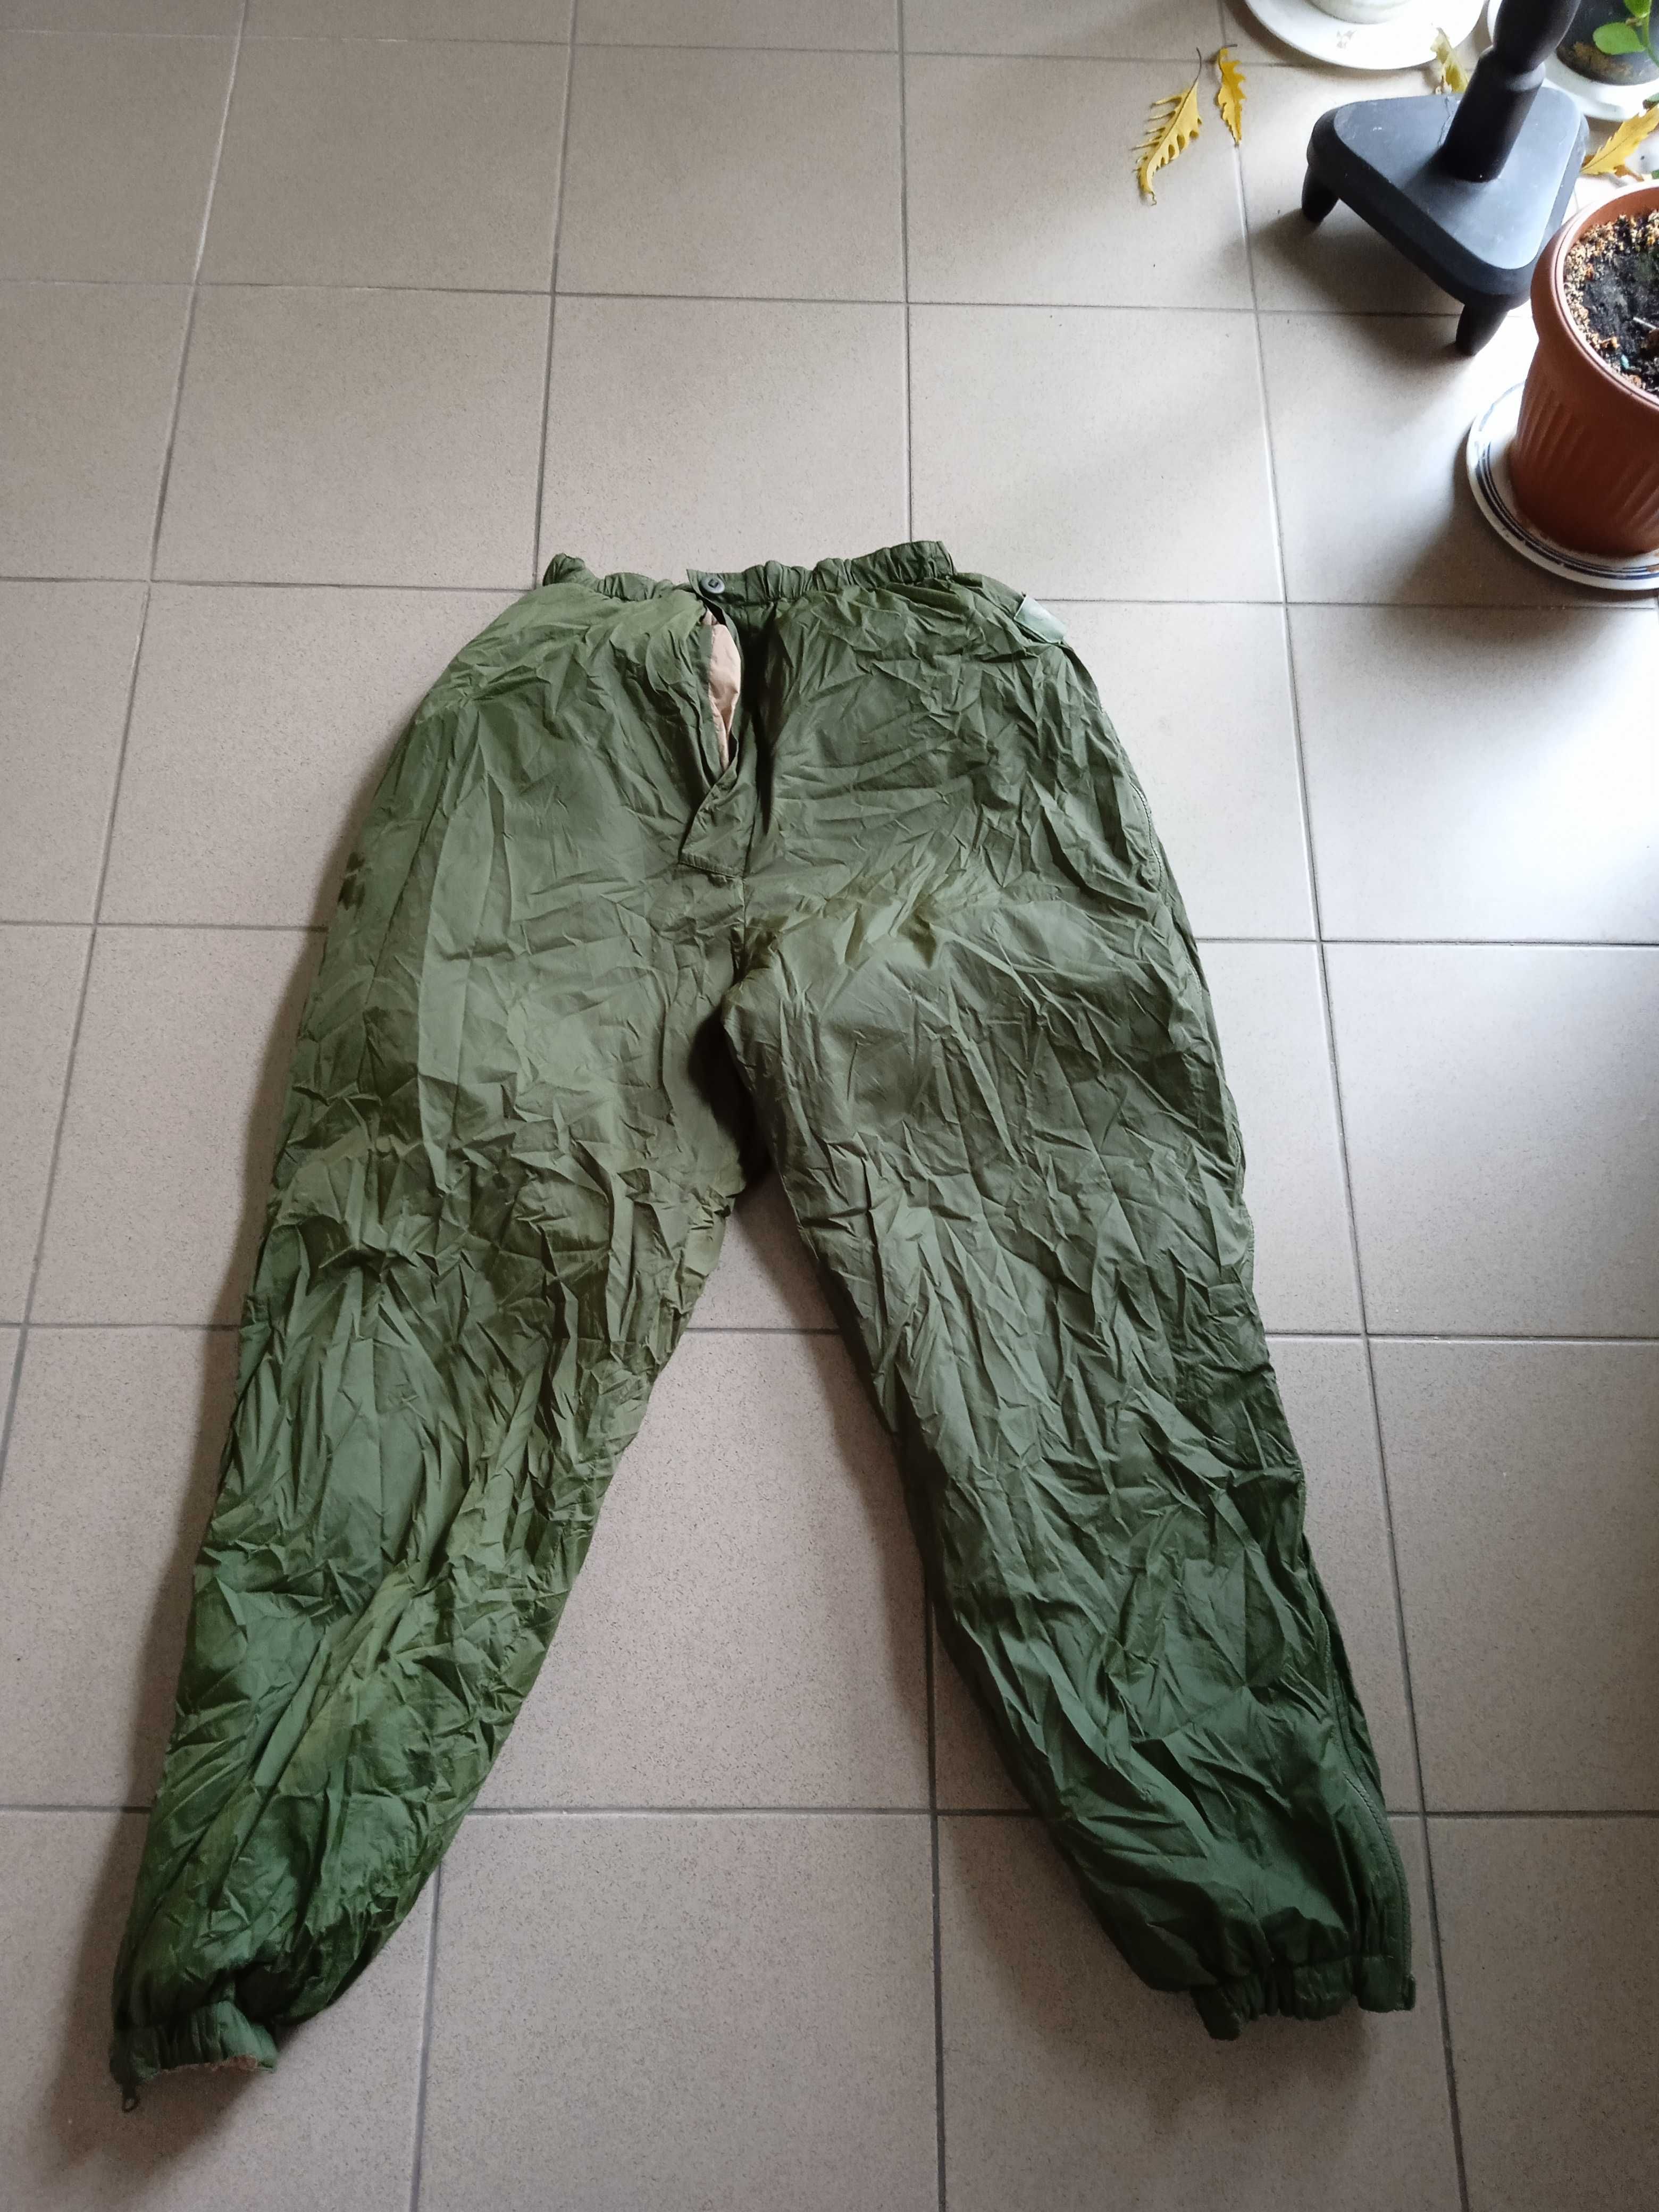 brytyjskie spodnie ocieplane штаны военные softhie OLIVE/SAND L